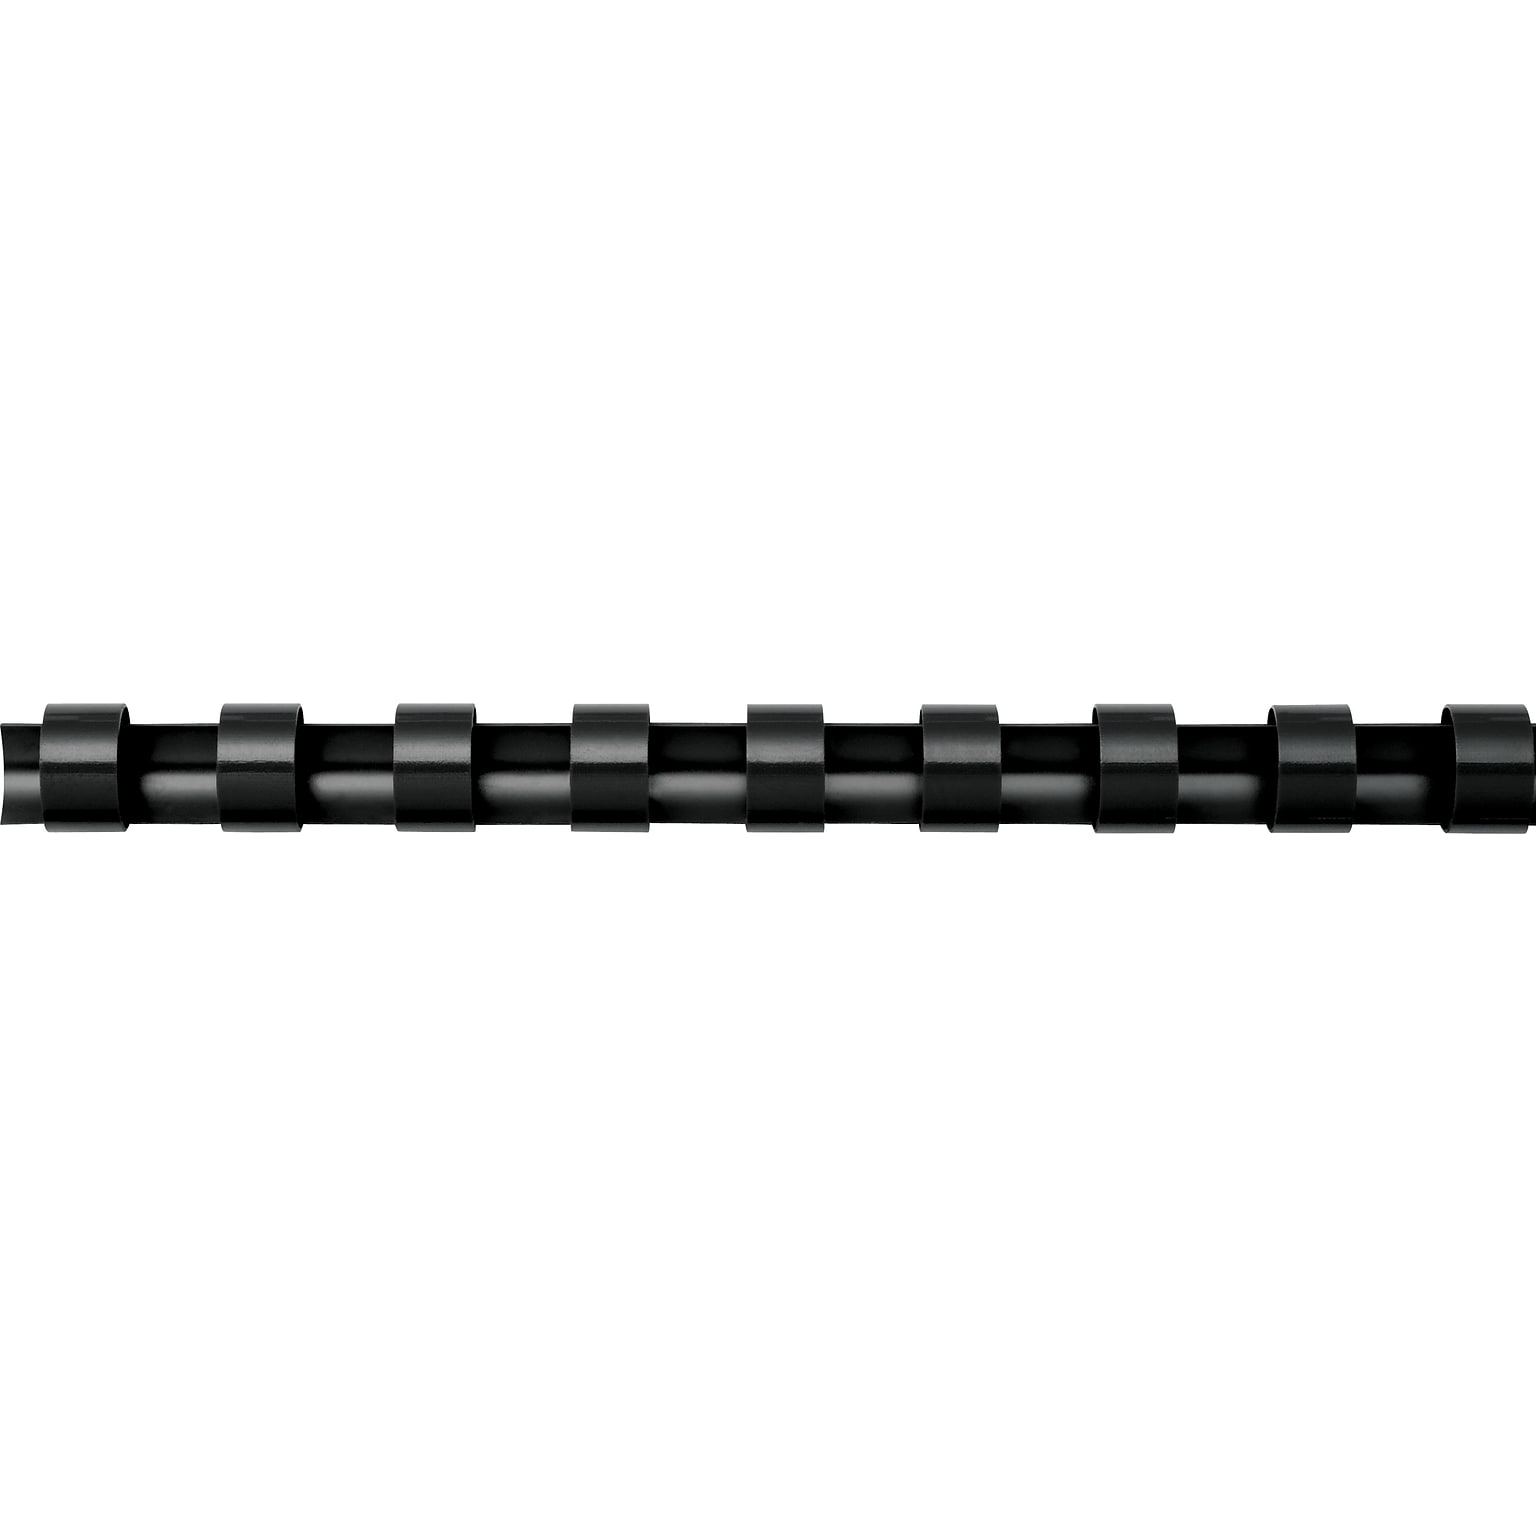 Fellowes 3/8 Plastic Binding Spine Comb, 55 Sheet Capacity, Black, 25/Pack (52322)